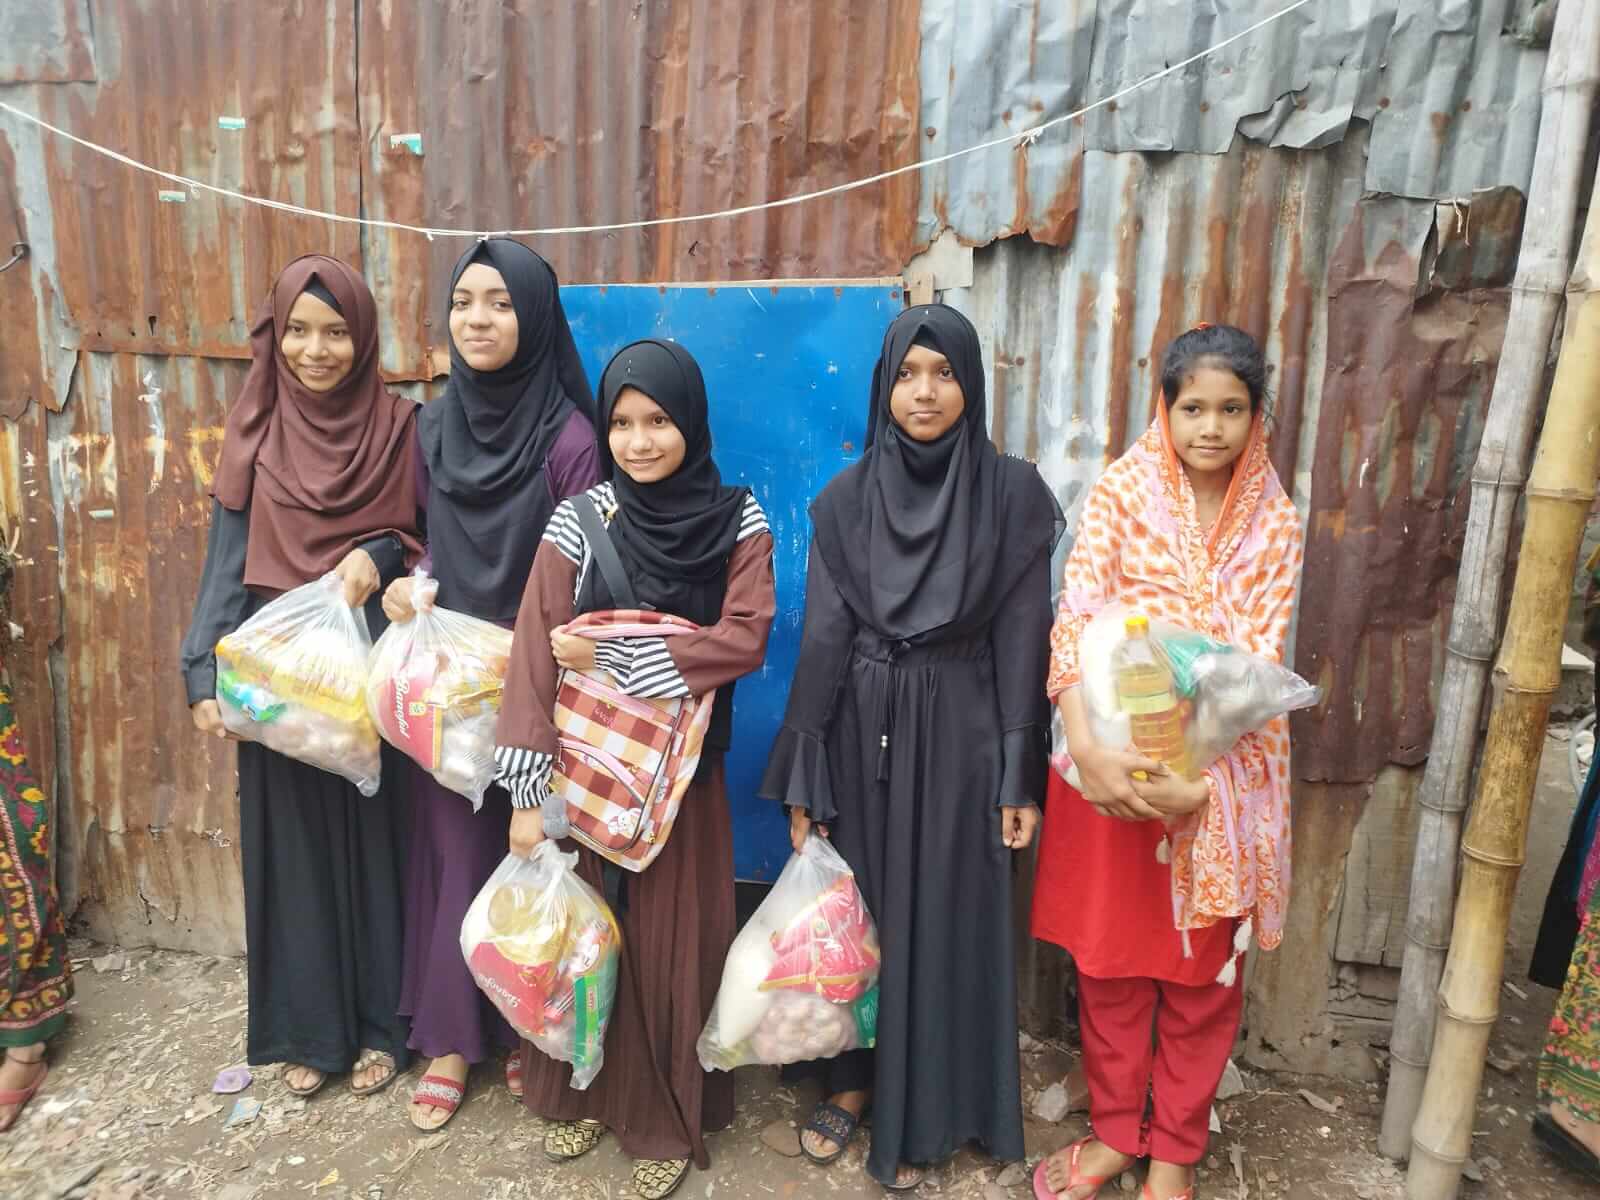 Mim, Mitu, Henna, Rabeya, Sahela received eid gifts